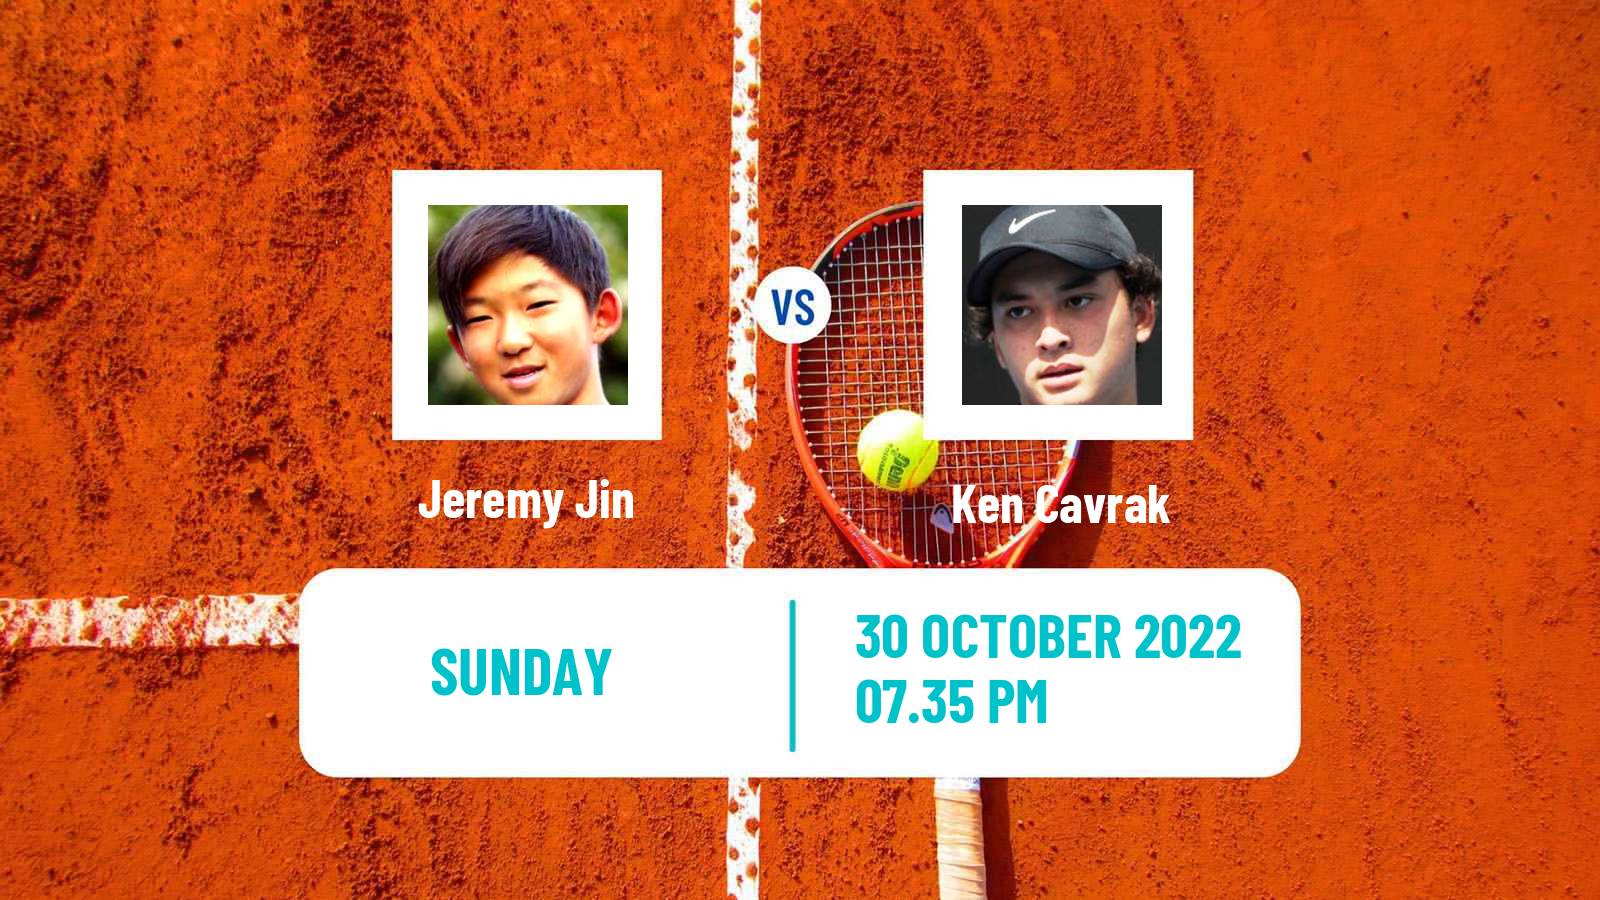 Tennis ATP Challenger Jeremy Jin - Ken Cavrak